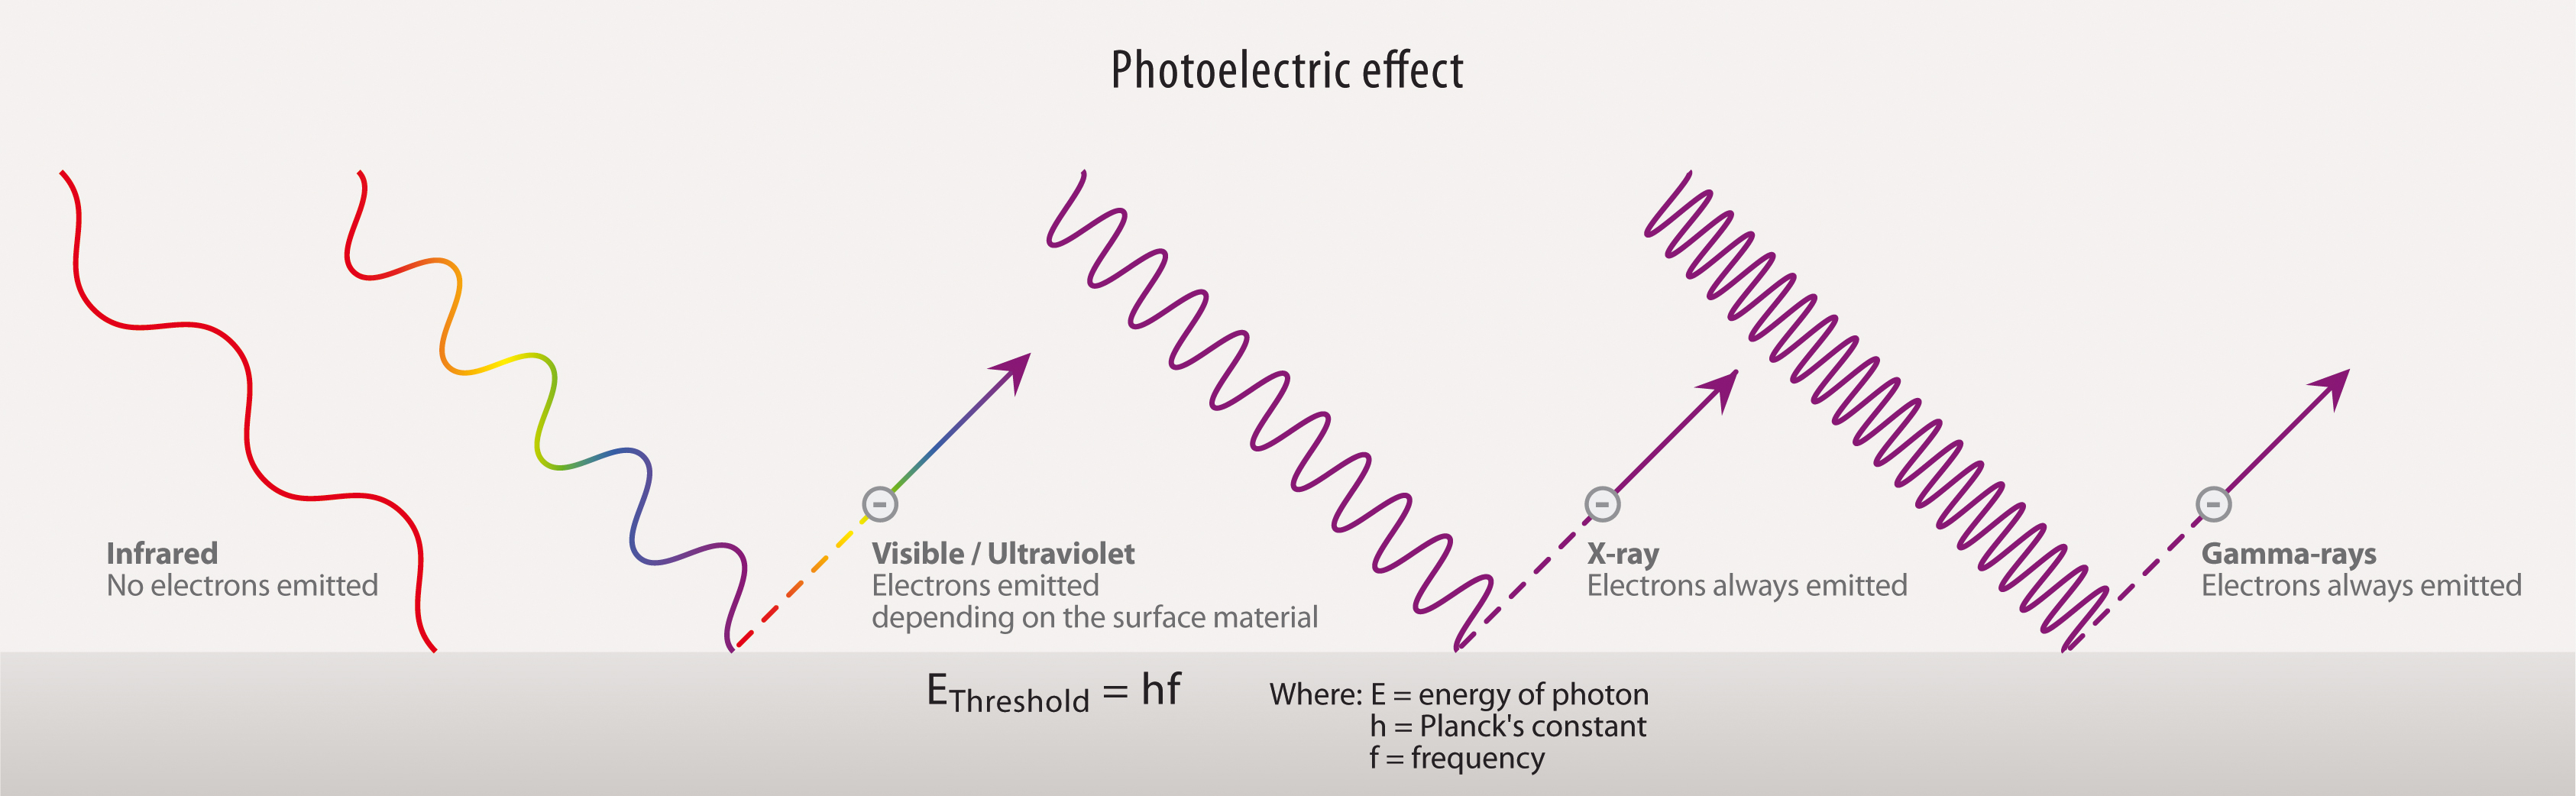 Figure_5_photoelectric_effect.jpg